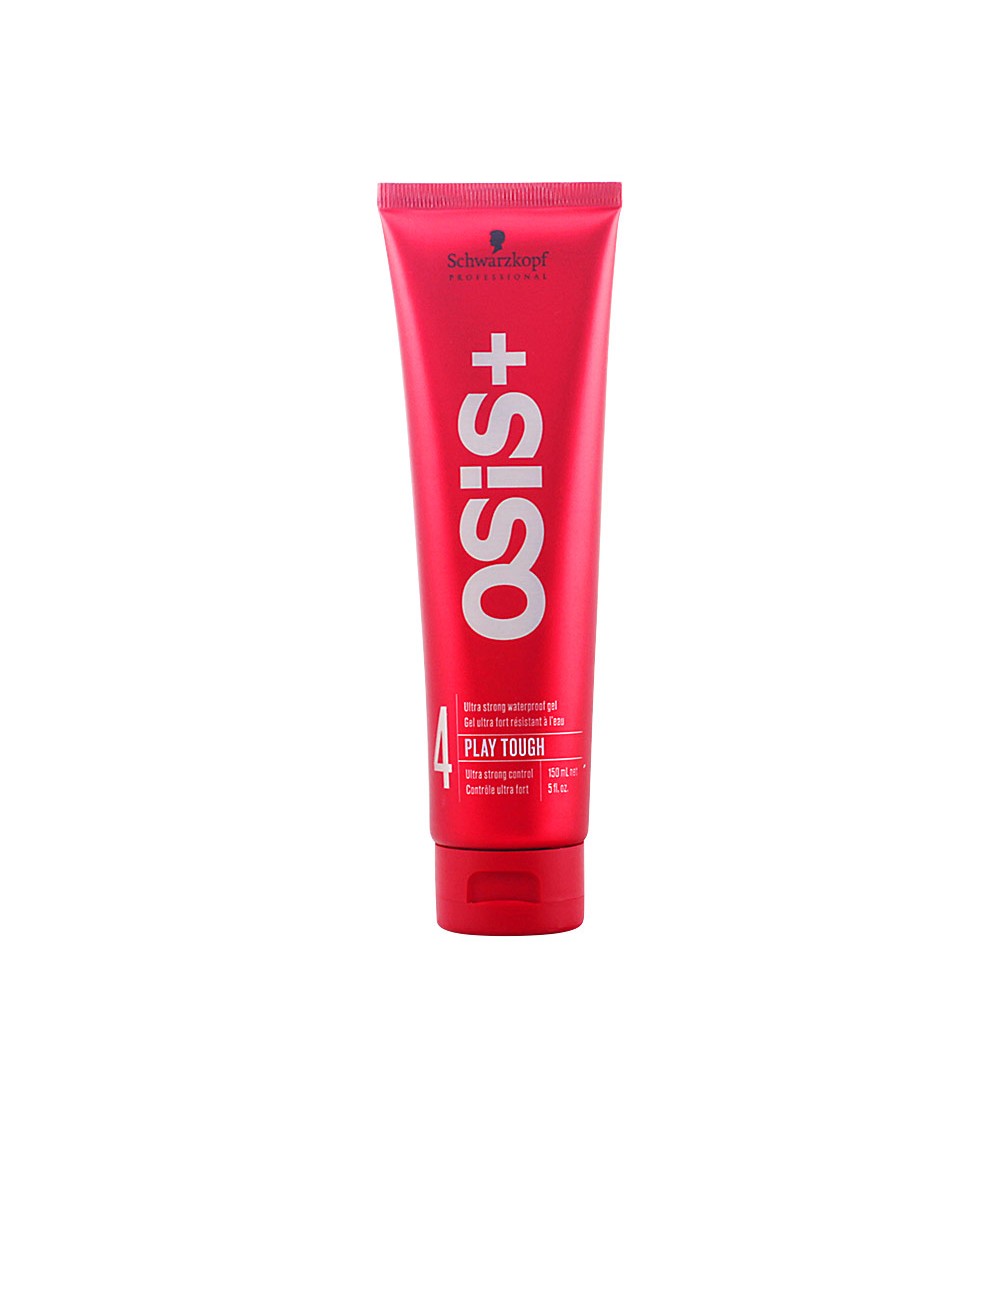 OSIS play tough ultra strong waterproof gel 150ml